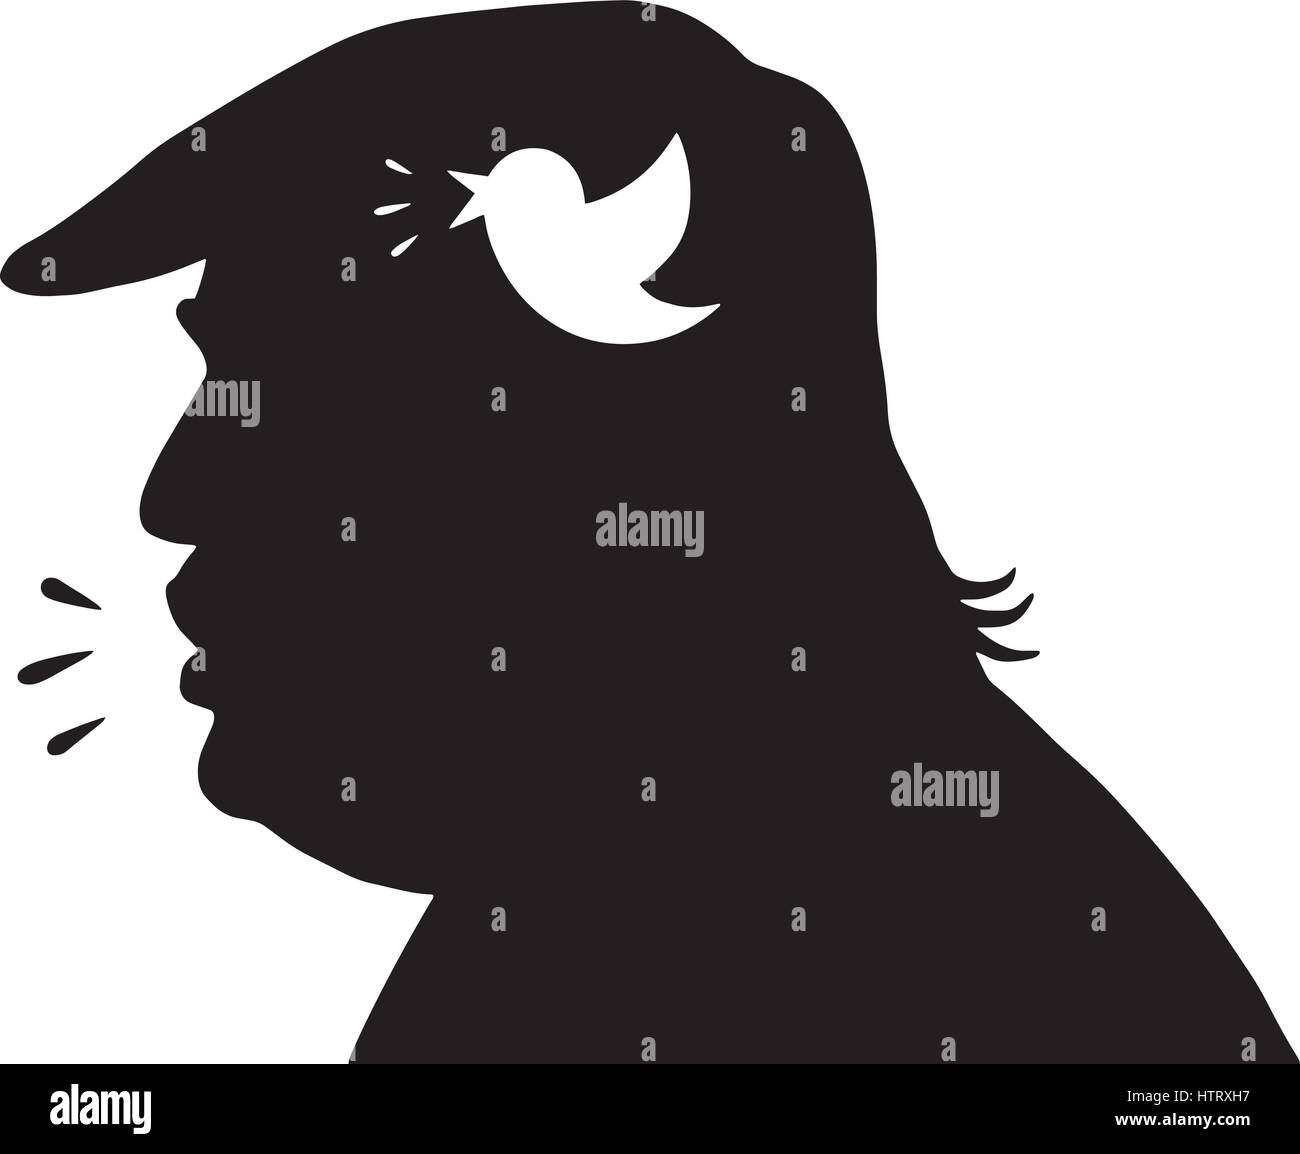 Donald Trump Silhouette und Social-Media-Symbol. Vektor-Illustration. New York, 13. Februar 2017 Stock Vektor